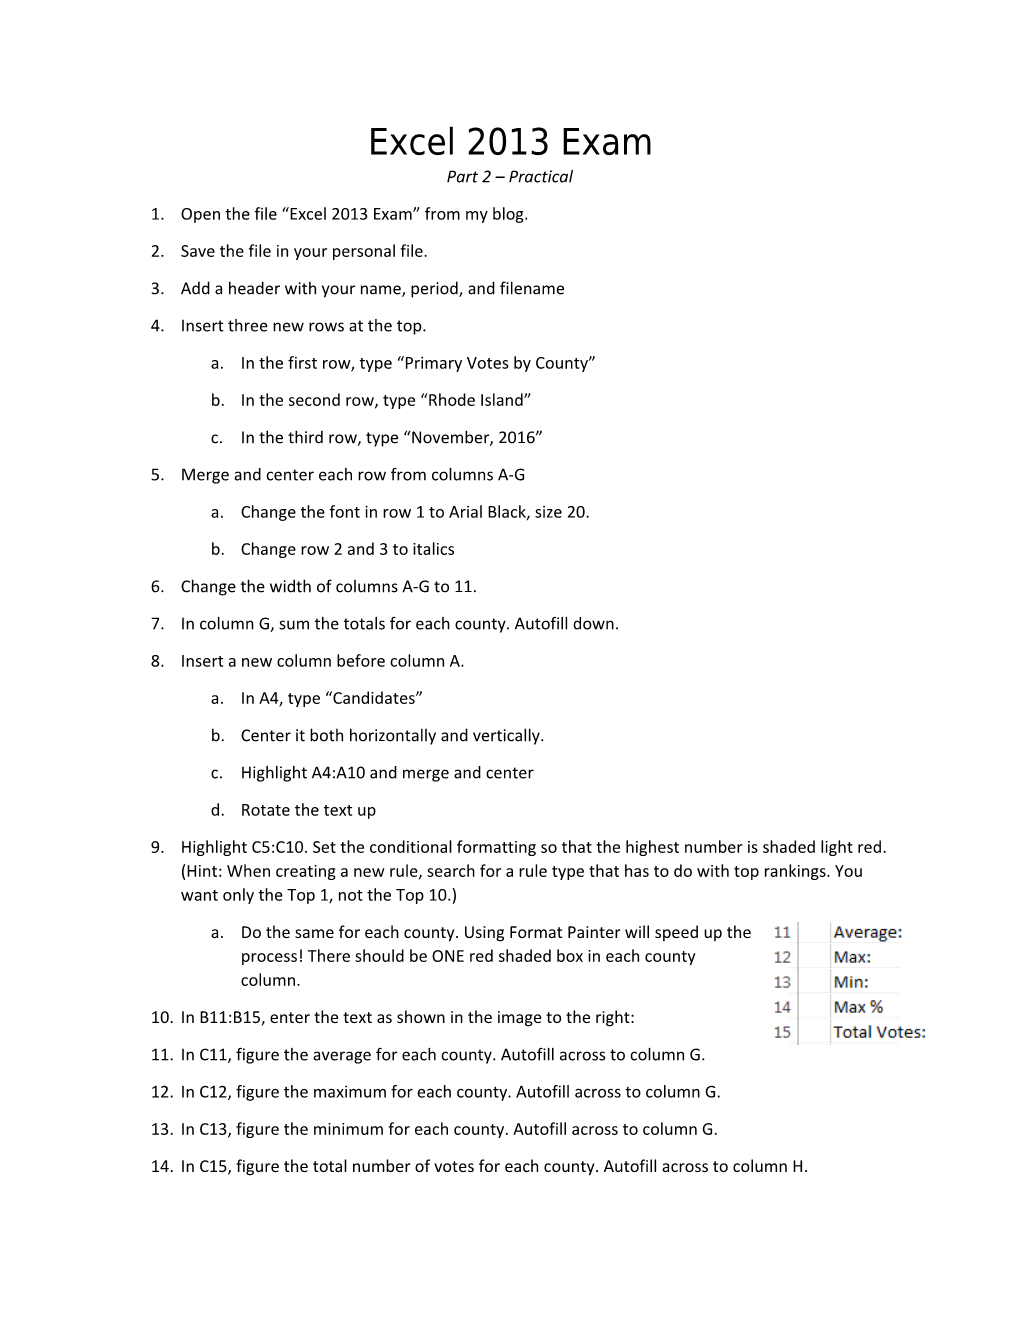 Excel 2013 Exam Part 2 Practical